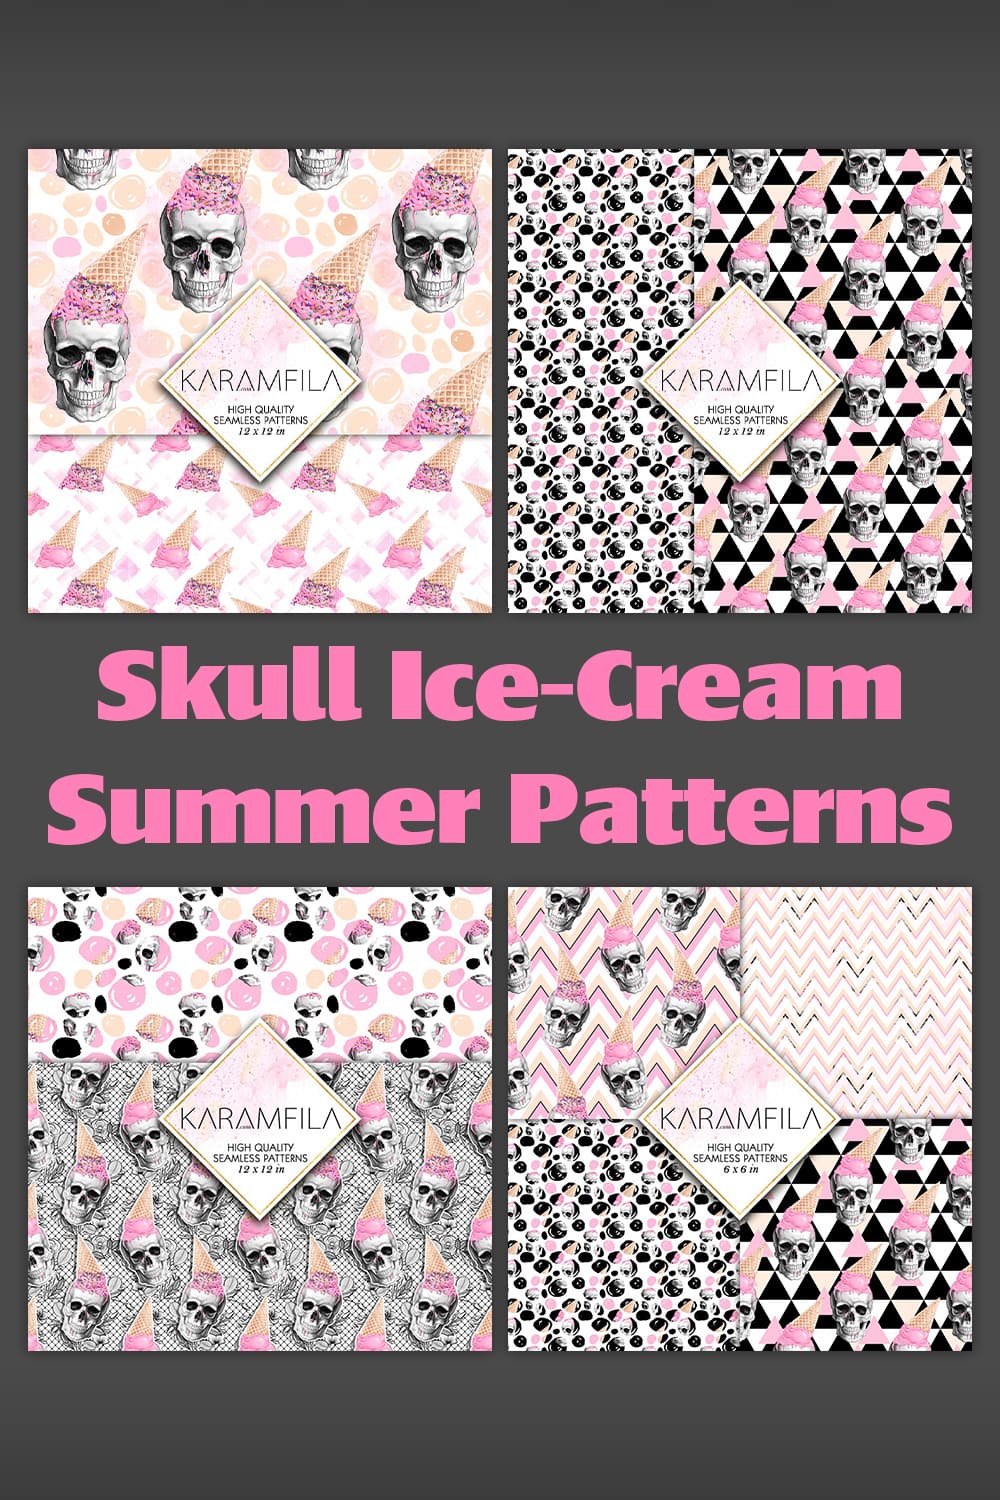 Skull Ice-Cream Summer Patterns pinterest image.